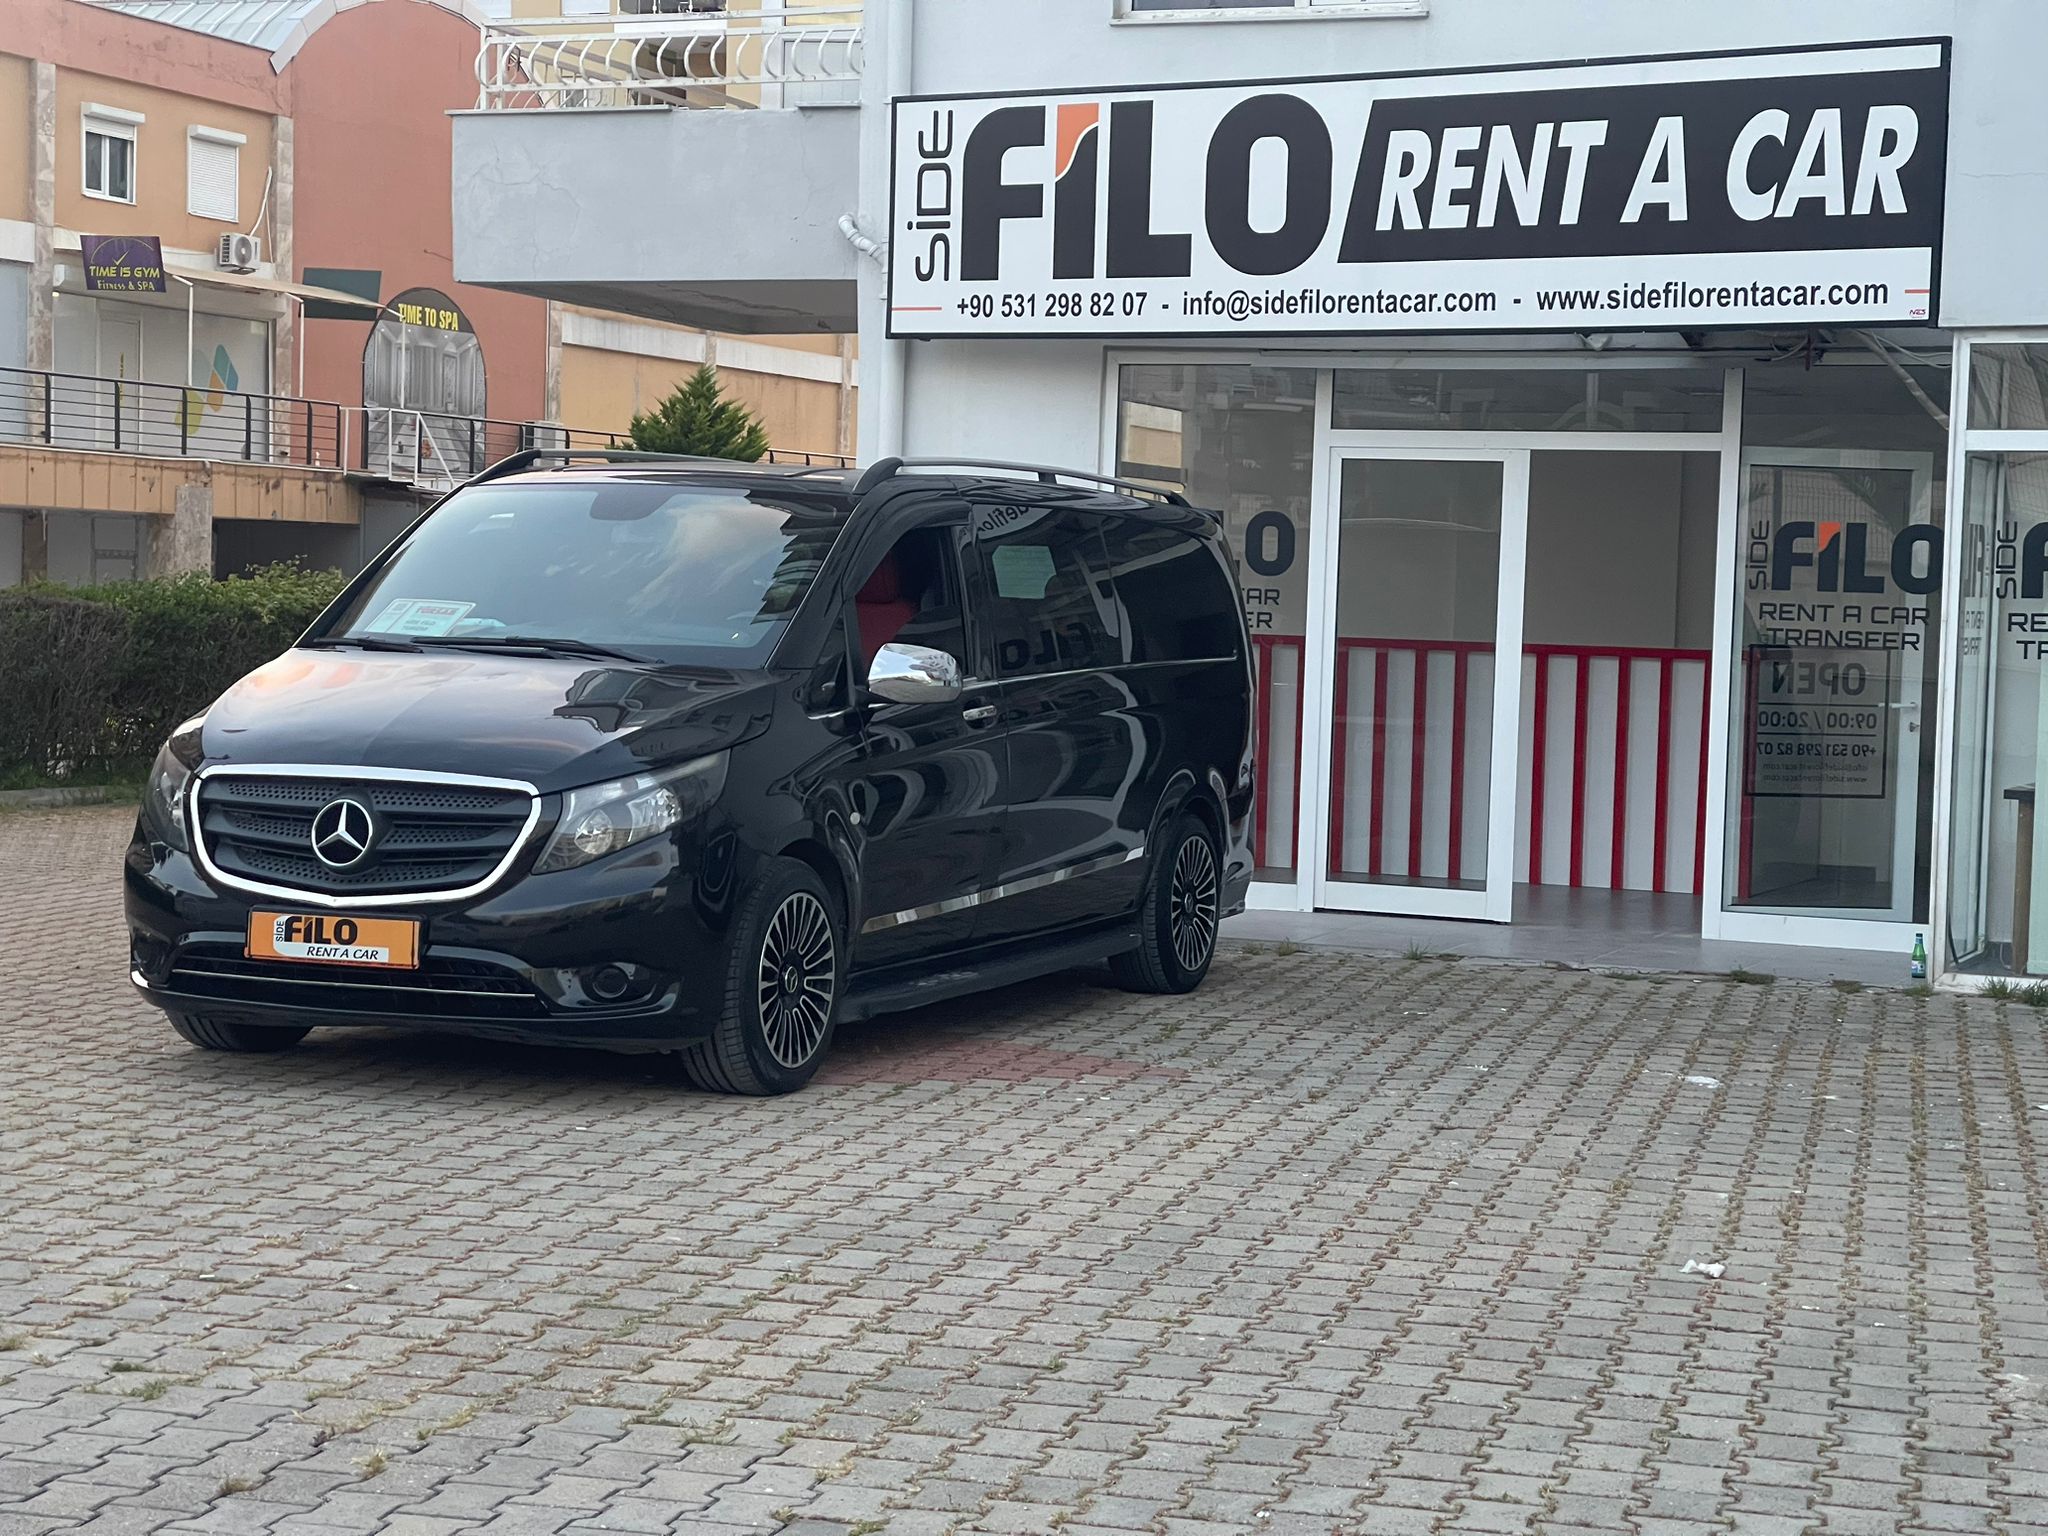 Antalya'da Minibüs Kiralama: Belek Rent A Car